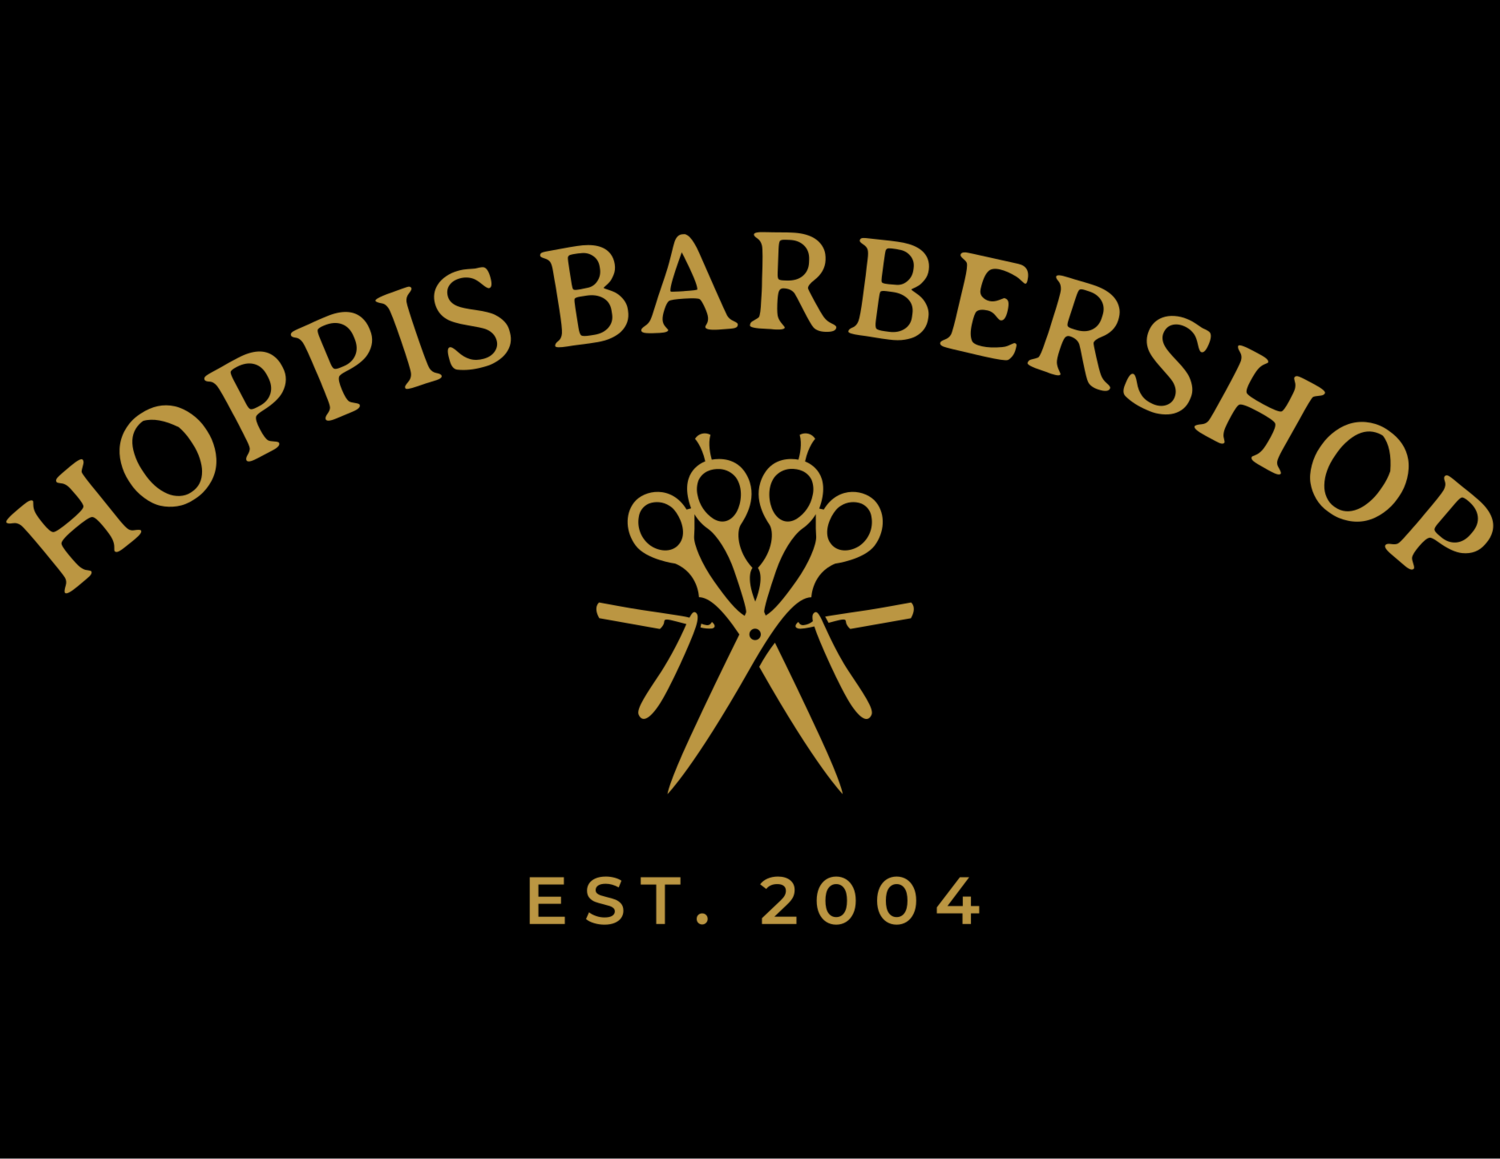 Hoppi's Barbershop